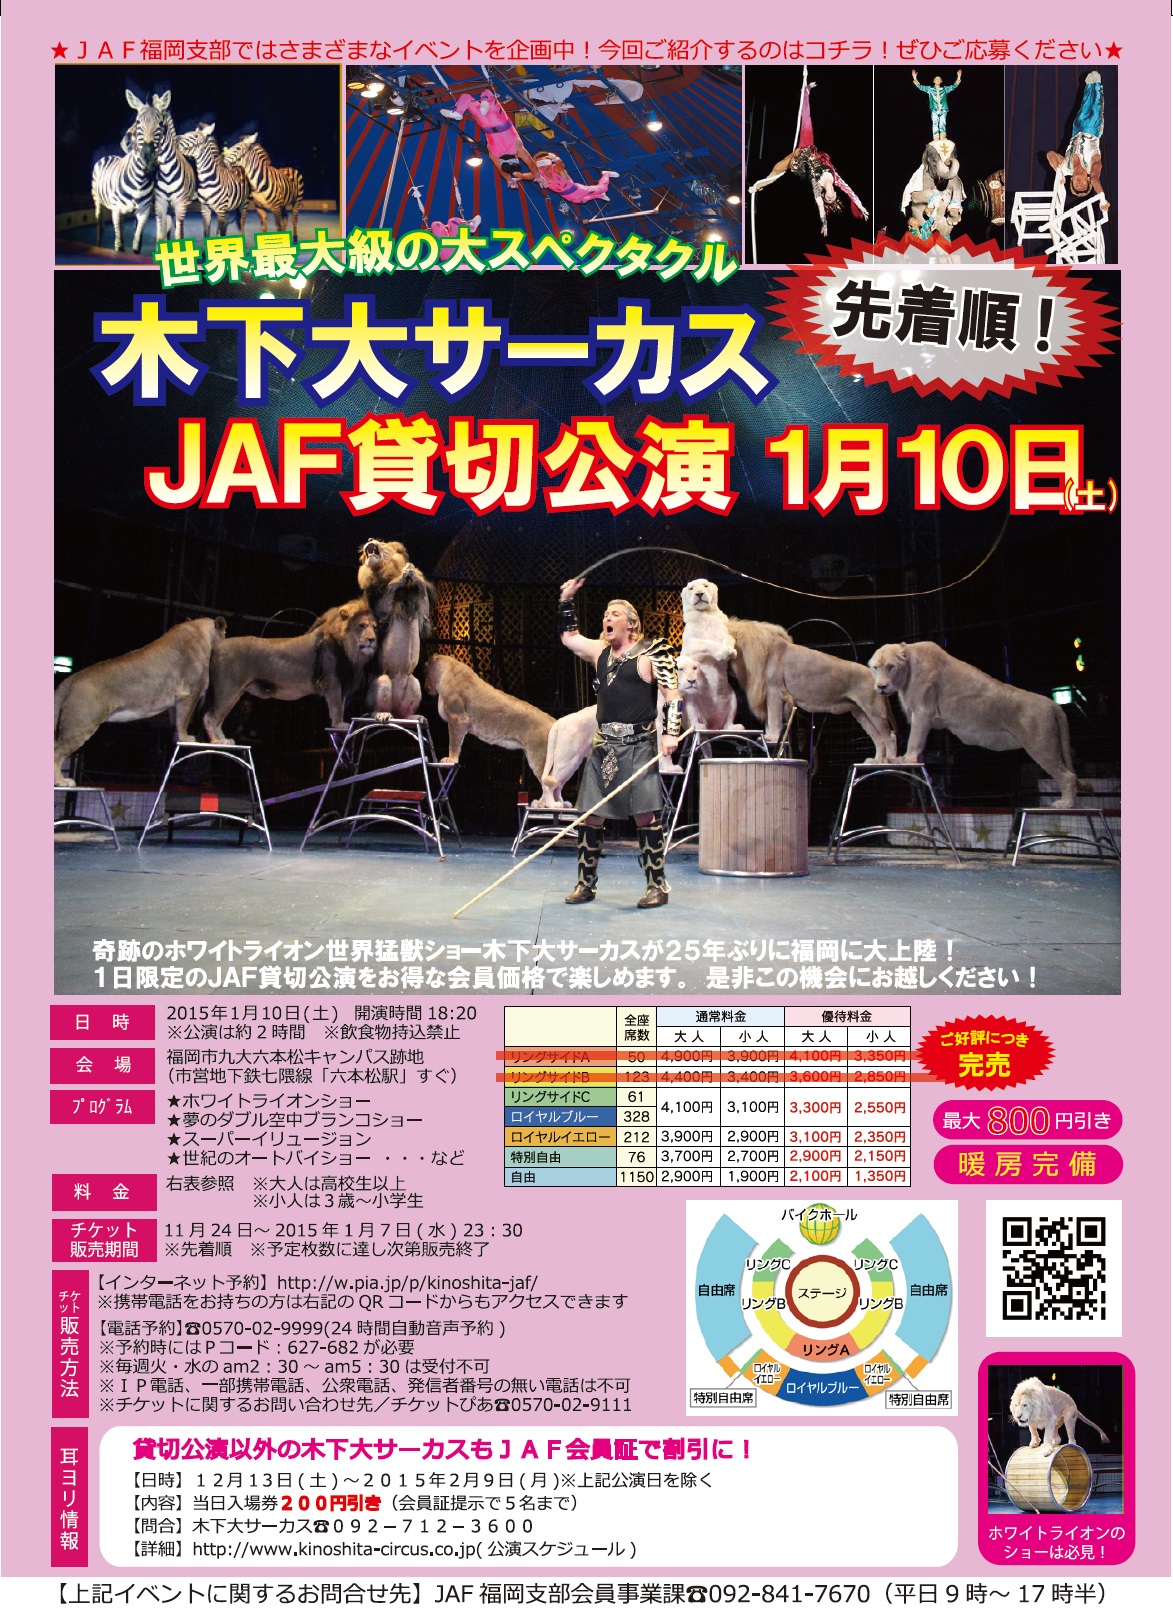 Jaf福岡 25年ぶりに福岡に上陸 木下大サーカス貸切公演を開催します 一般社団法人 日本自動車連盟 Jaf 地方 のプレスリリース